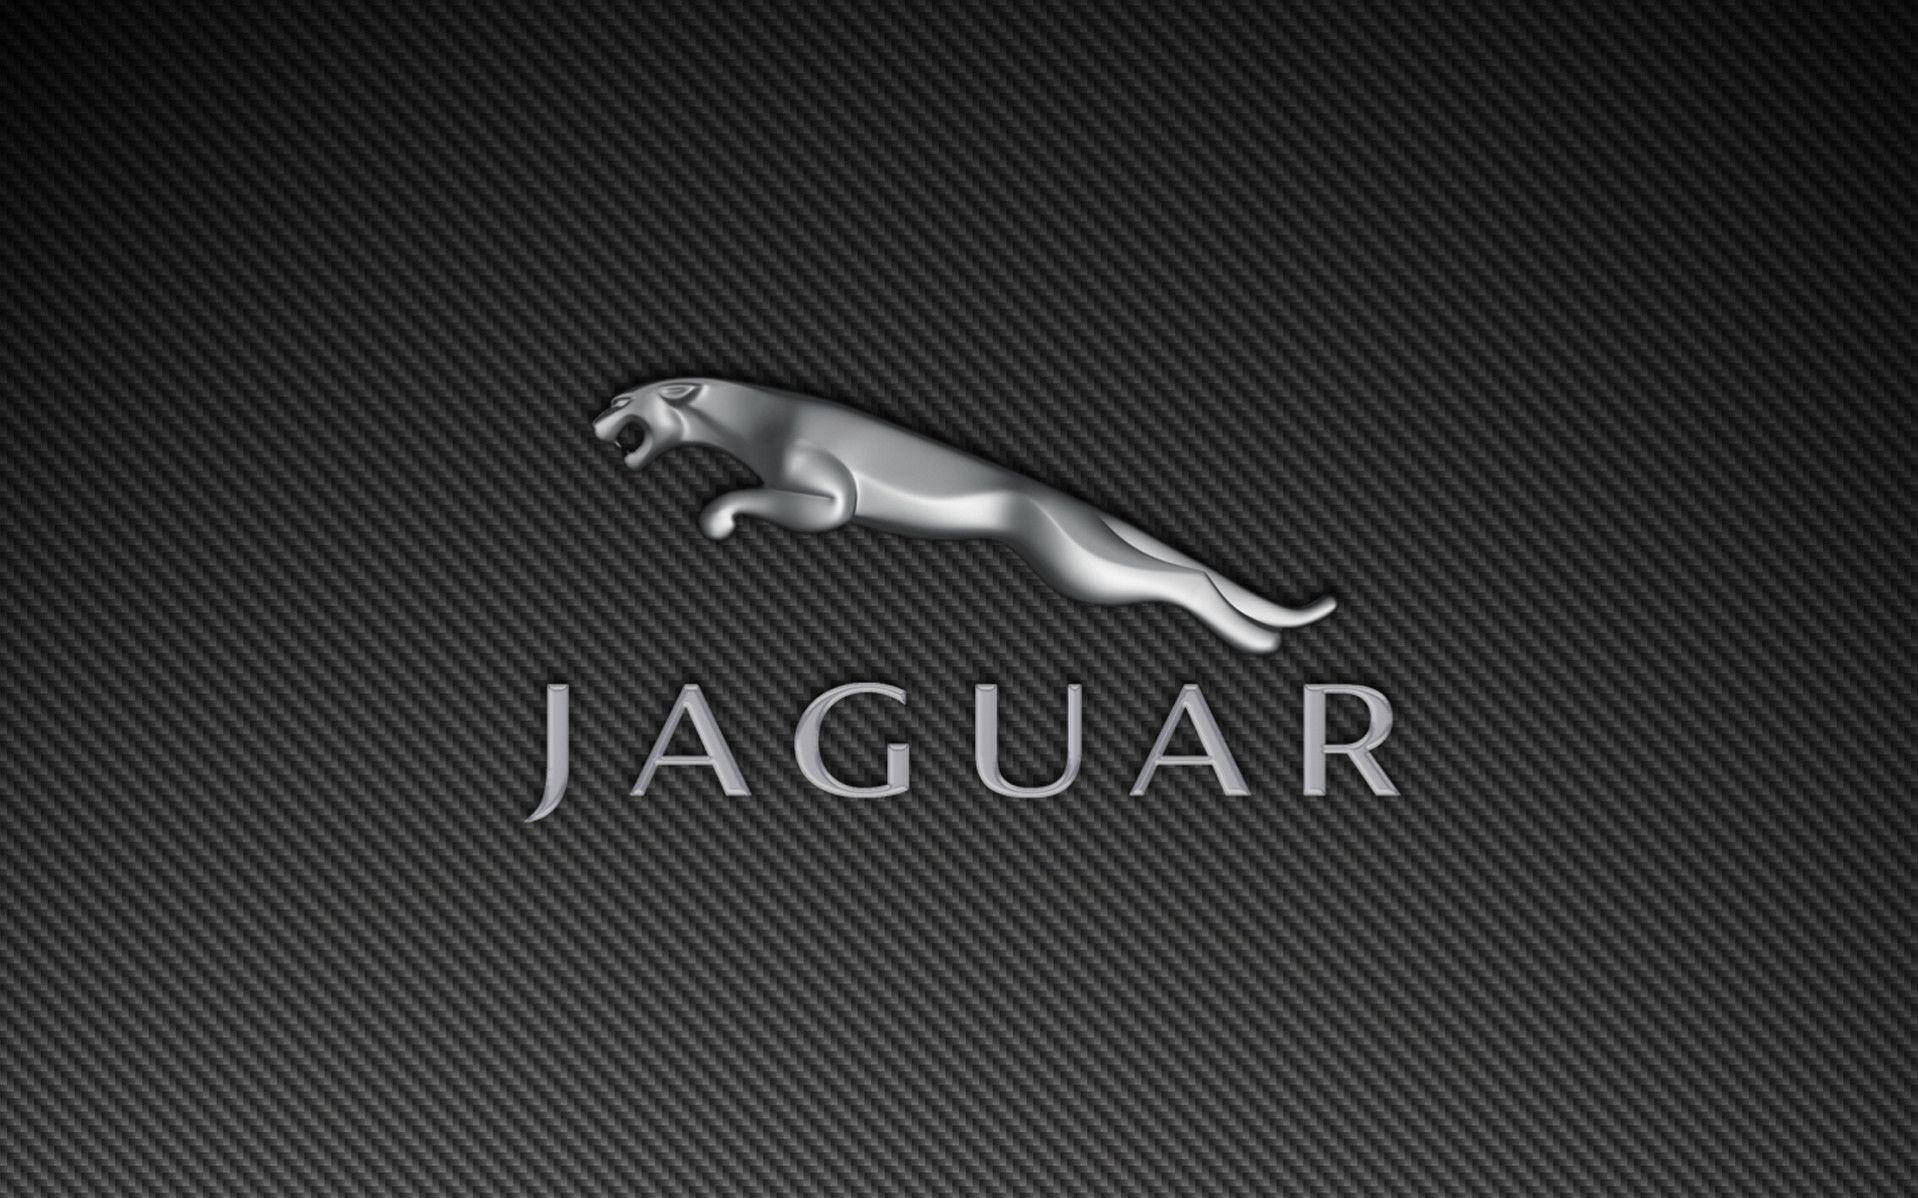 Jaguar Logo For Car Brands Wallpaper